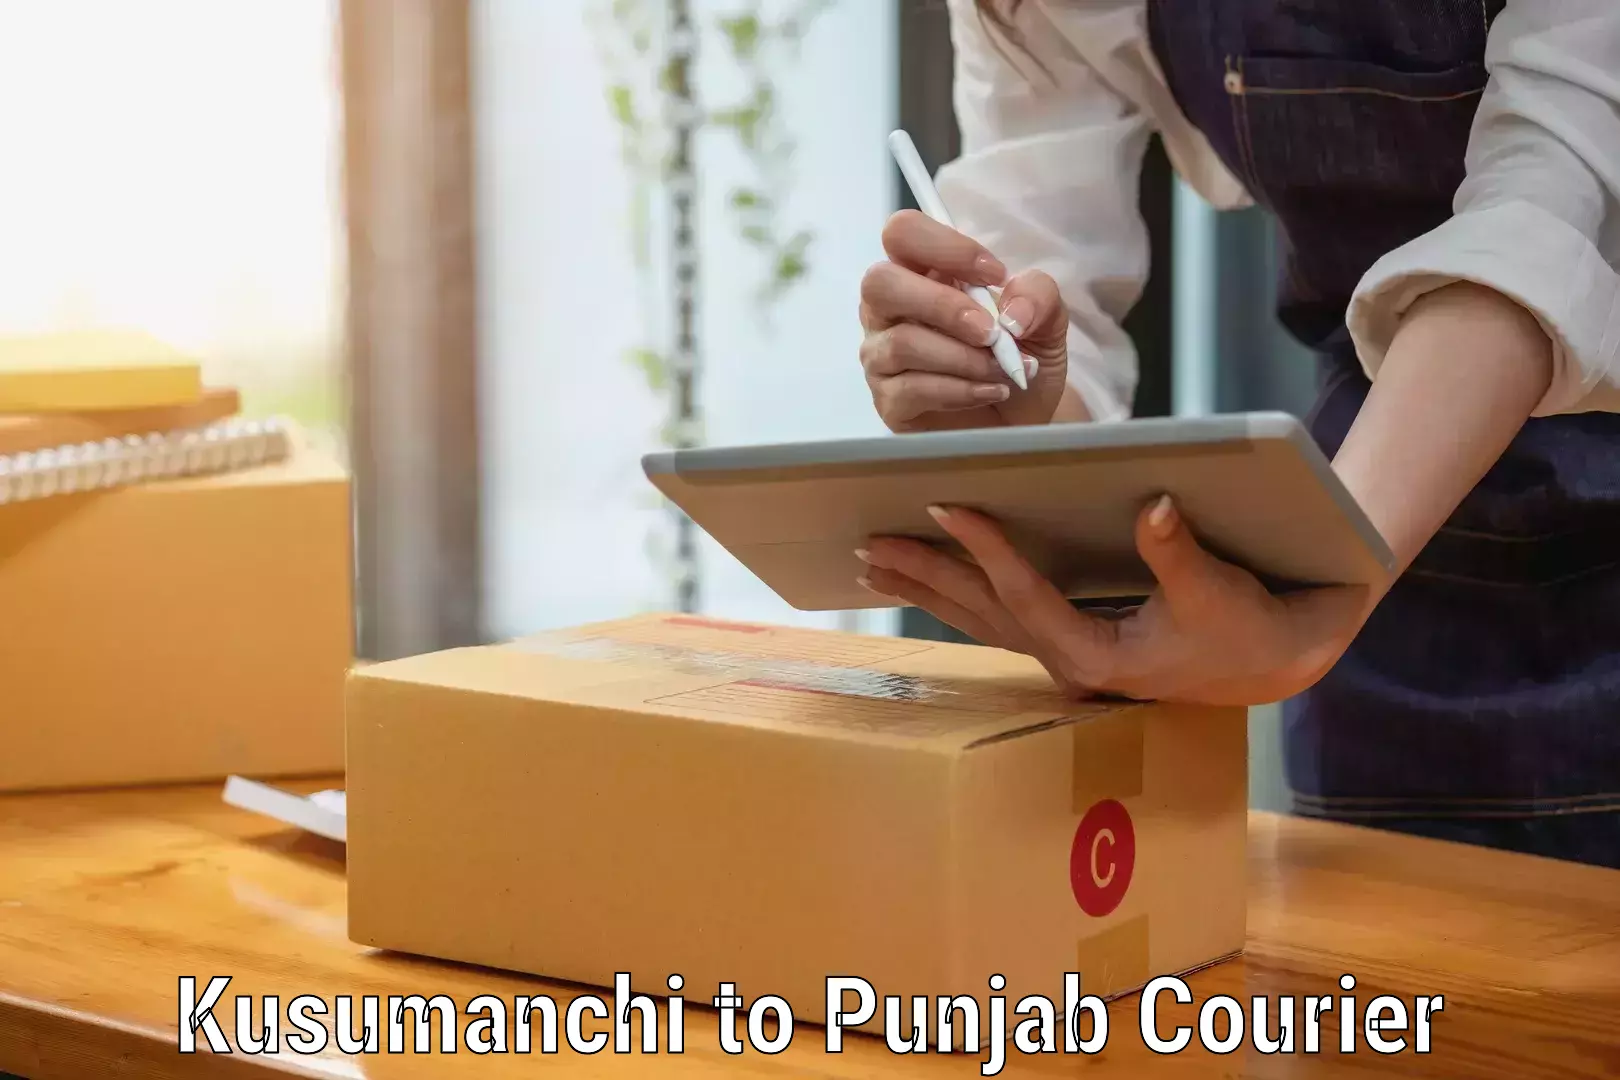 Trusted relocation services Kusumanchi to Punjab